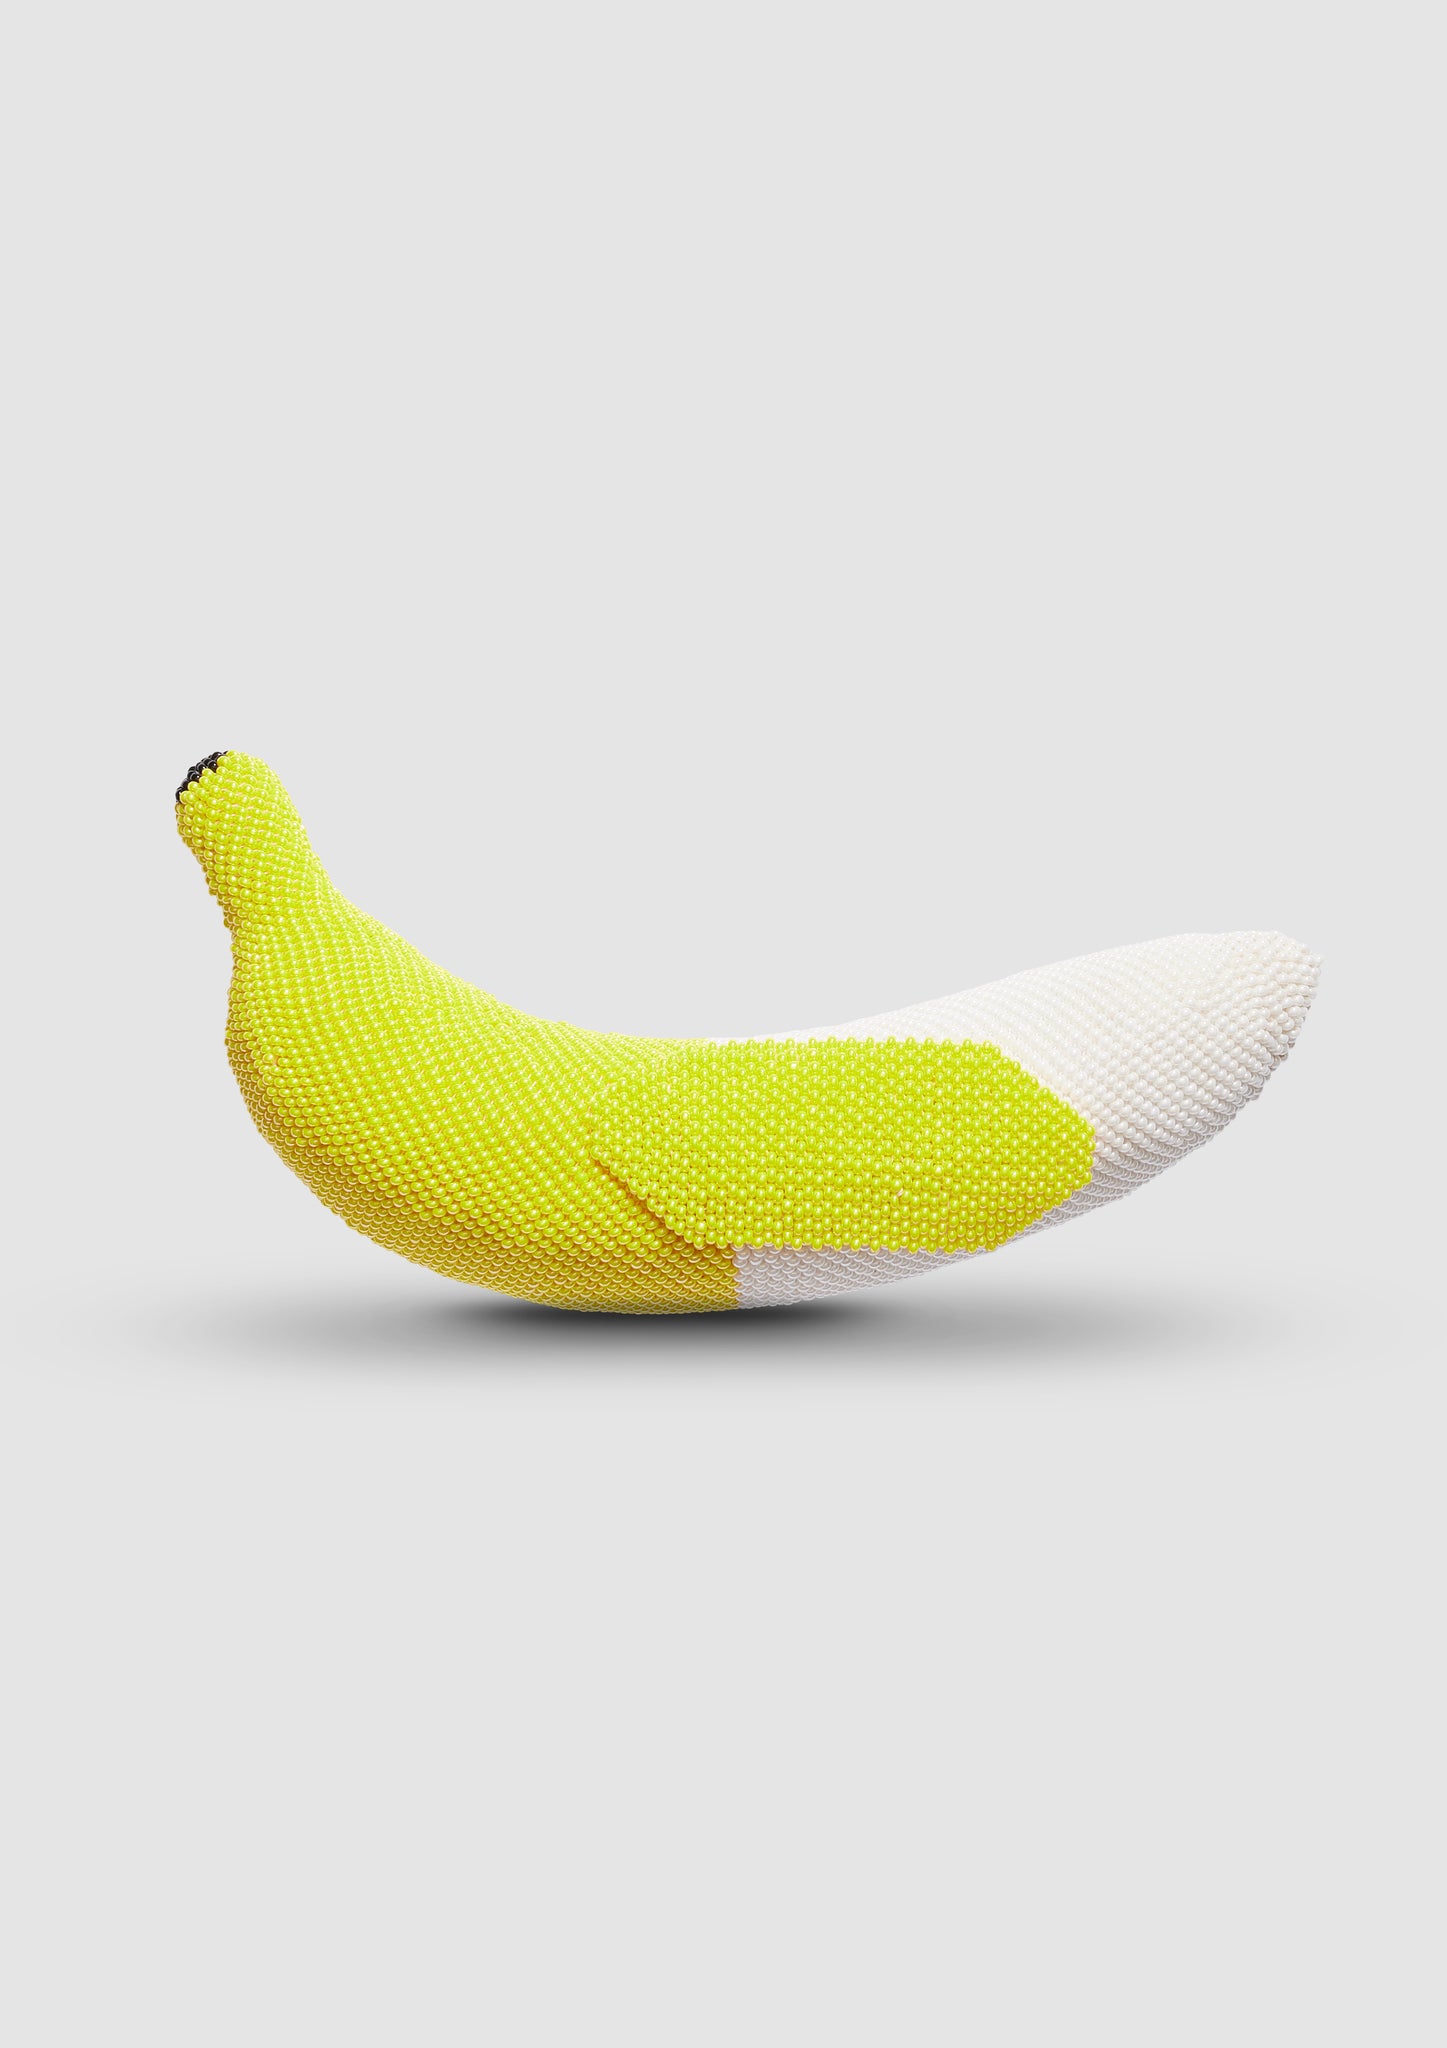 Big Banana Adornment